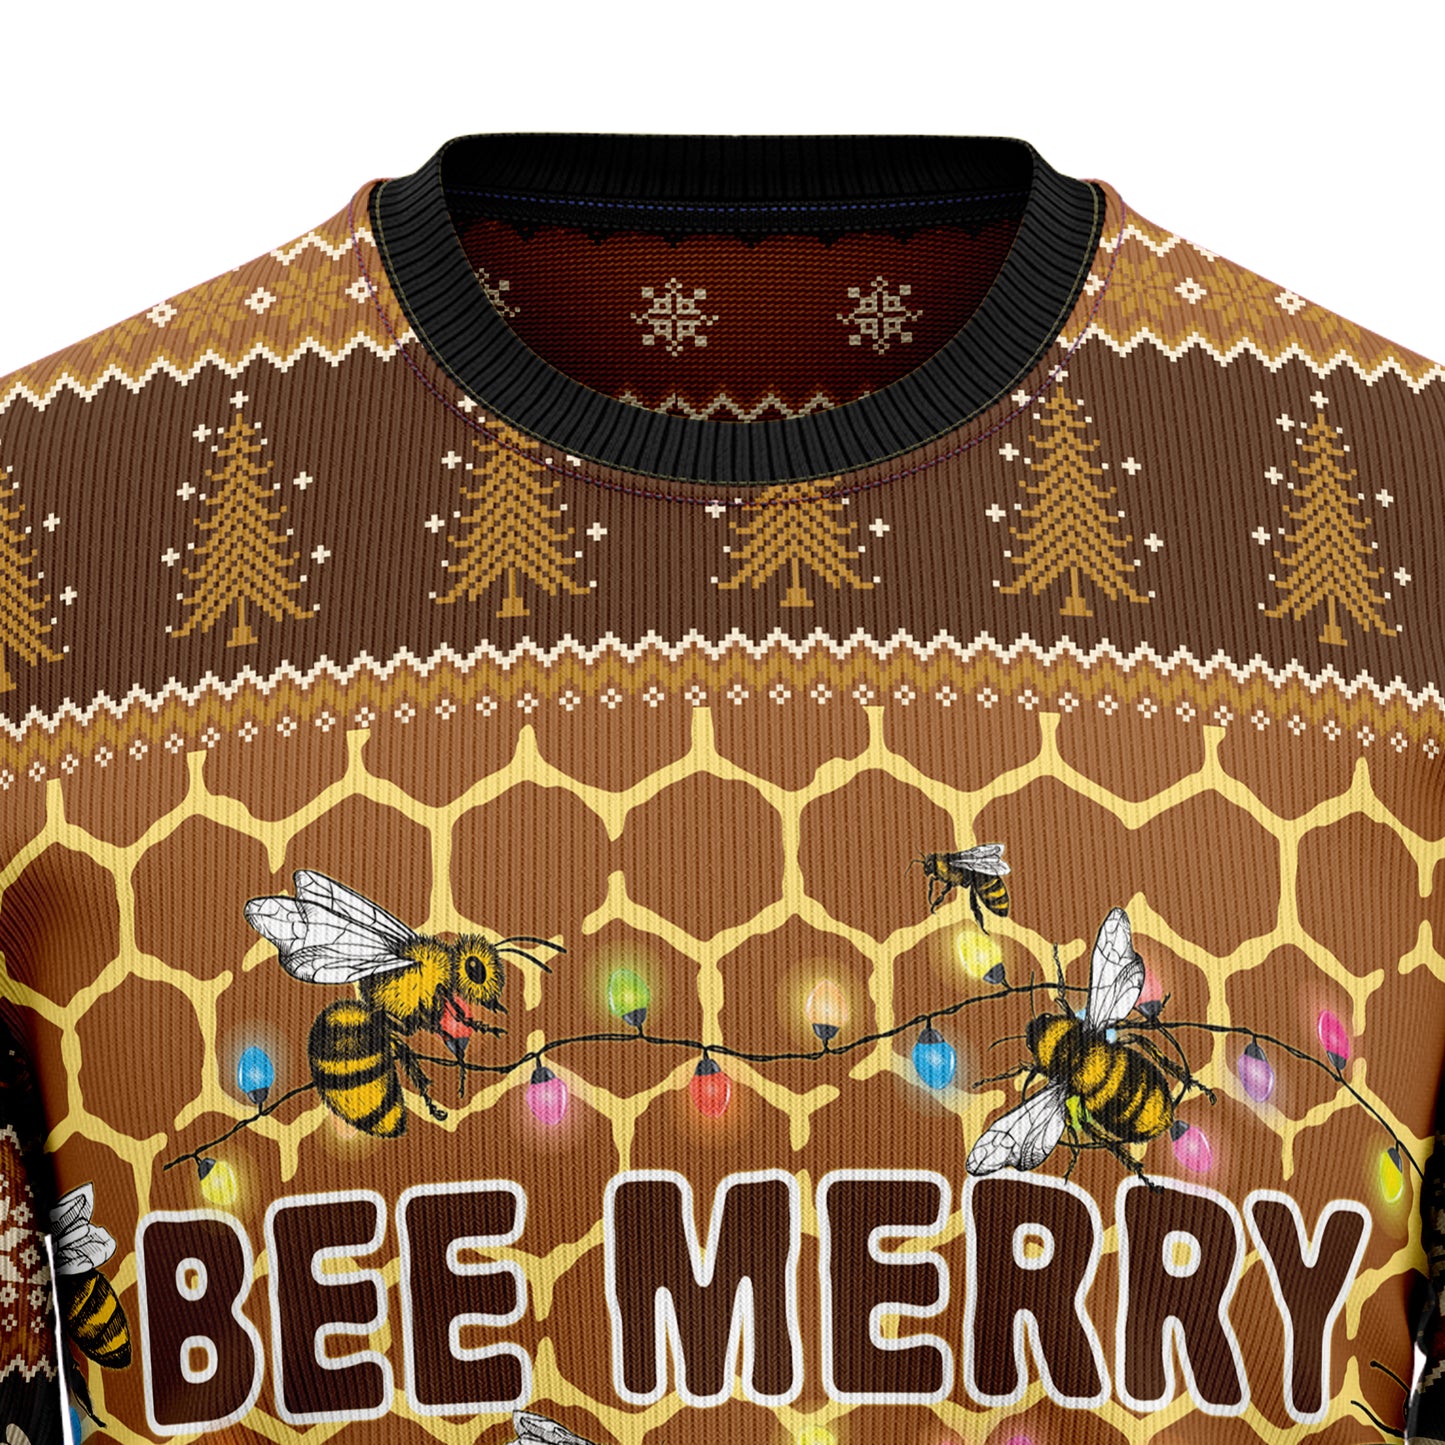 Bee Merry TG51013 Ugly Christmas Sweater